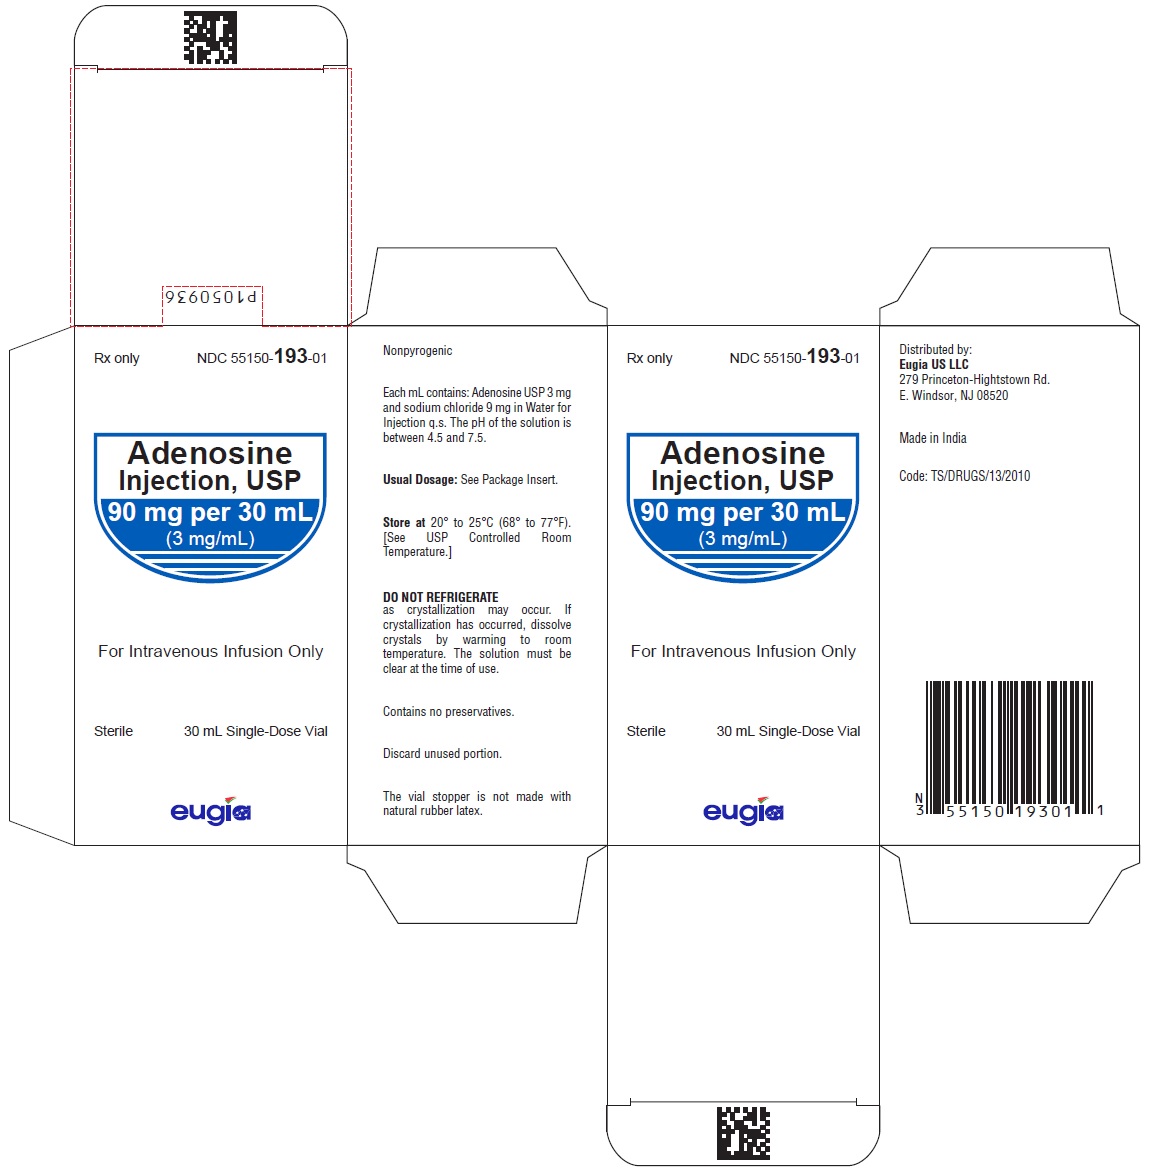 PACKAGE LABEL-PRINCIPAL DISPLAY PANEL - 90 mg per 30 mL (3 mg/mL) - Container-Carton (1 Vial)